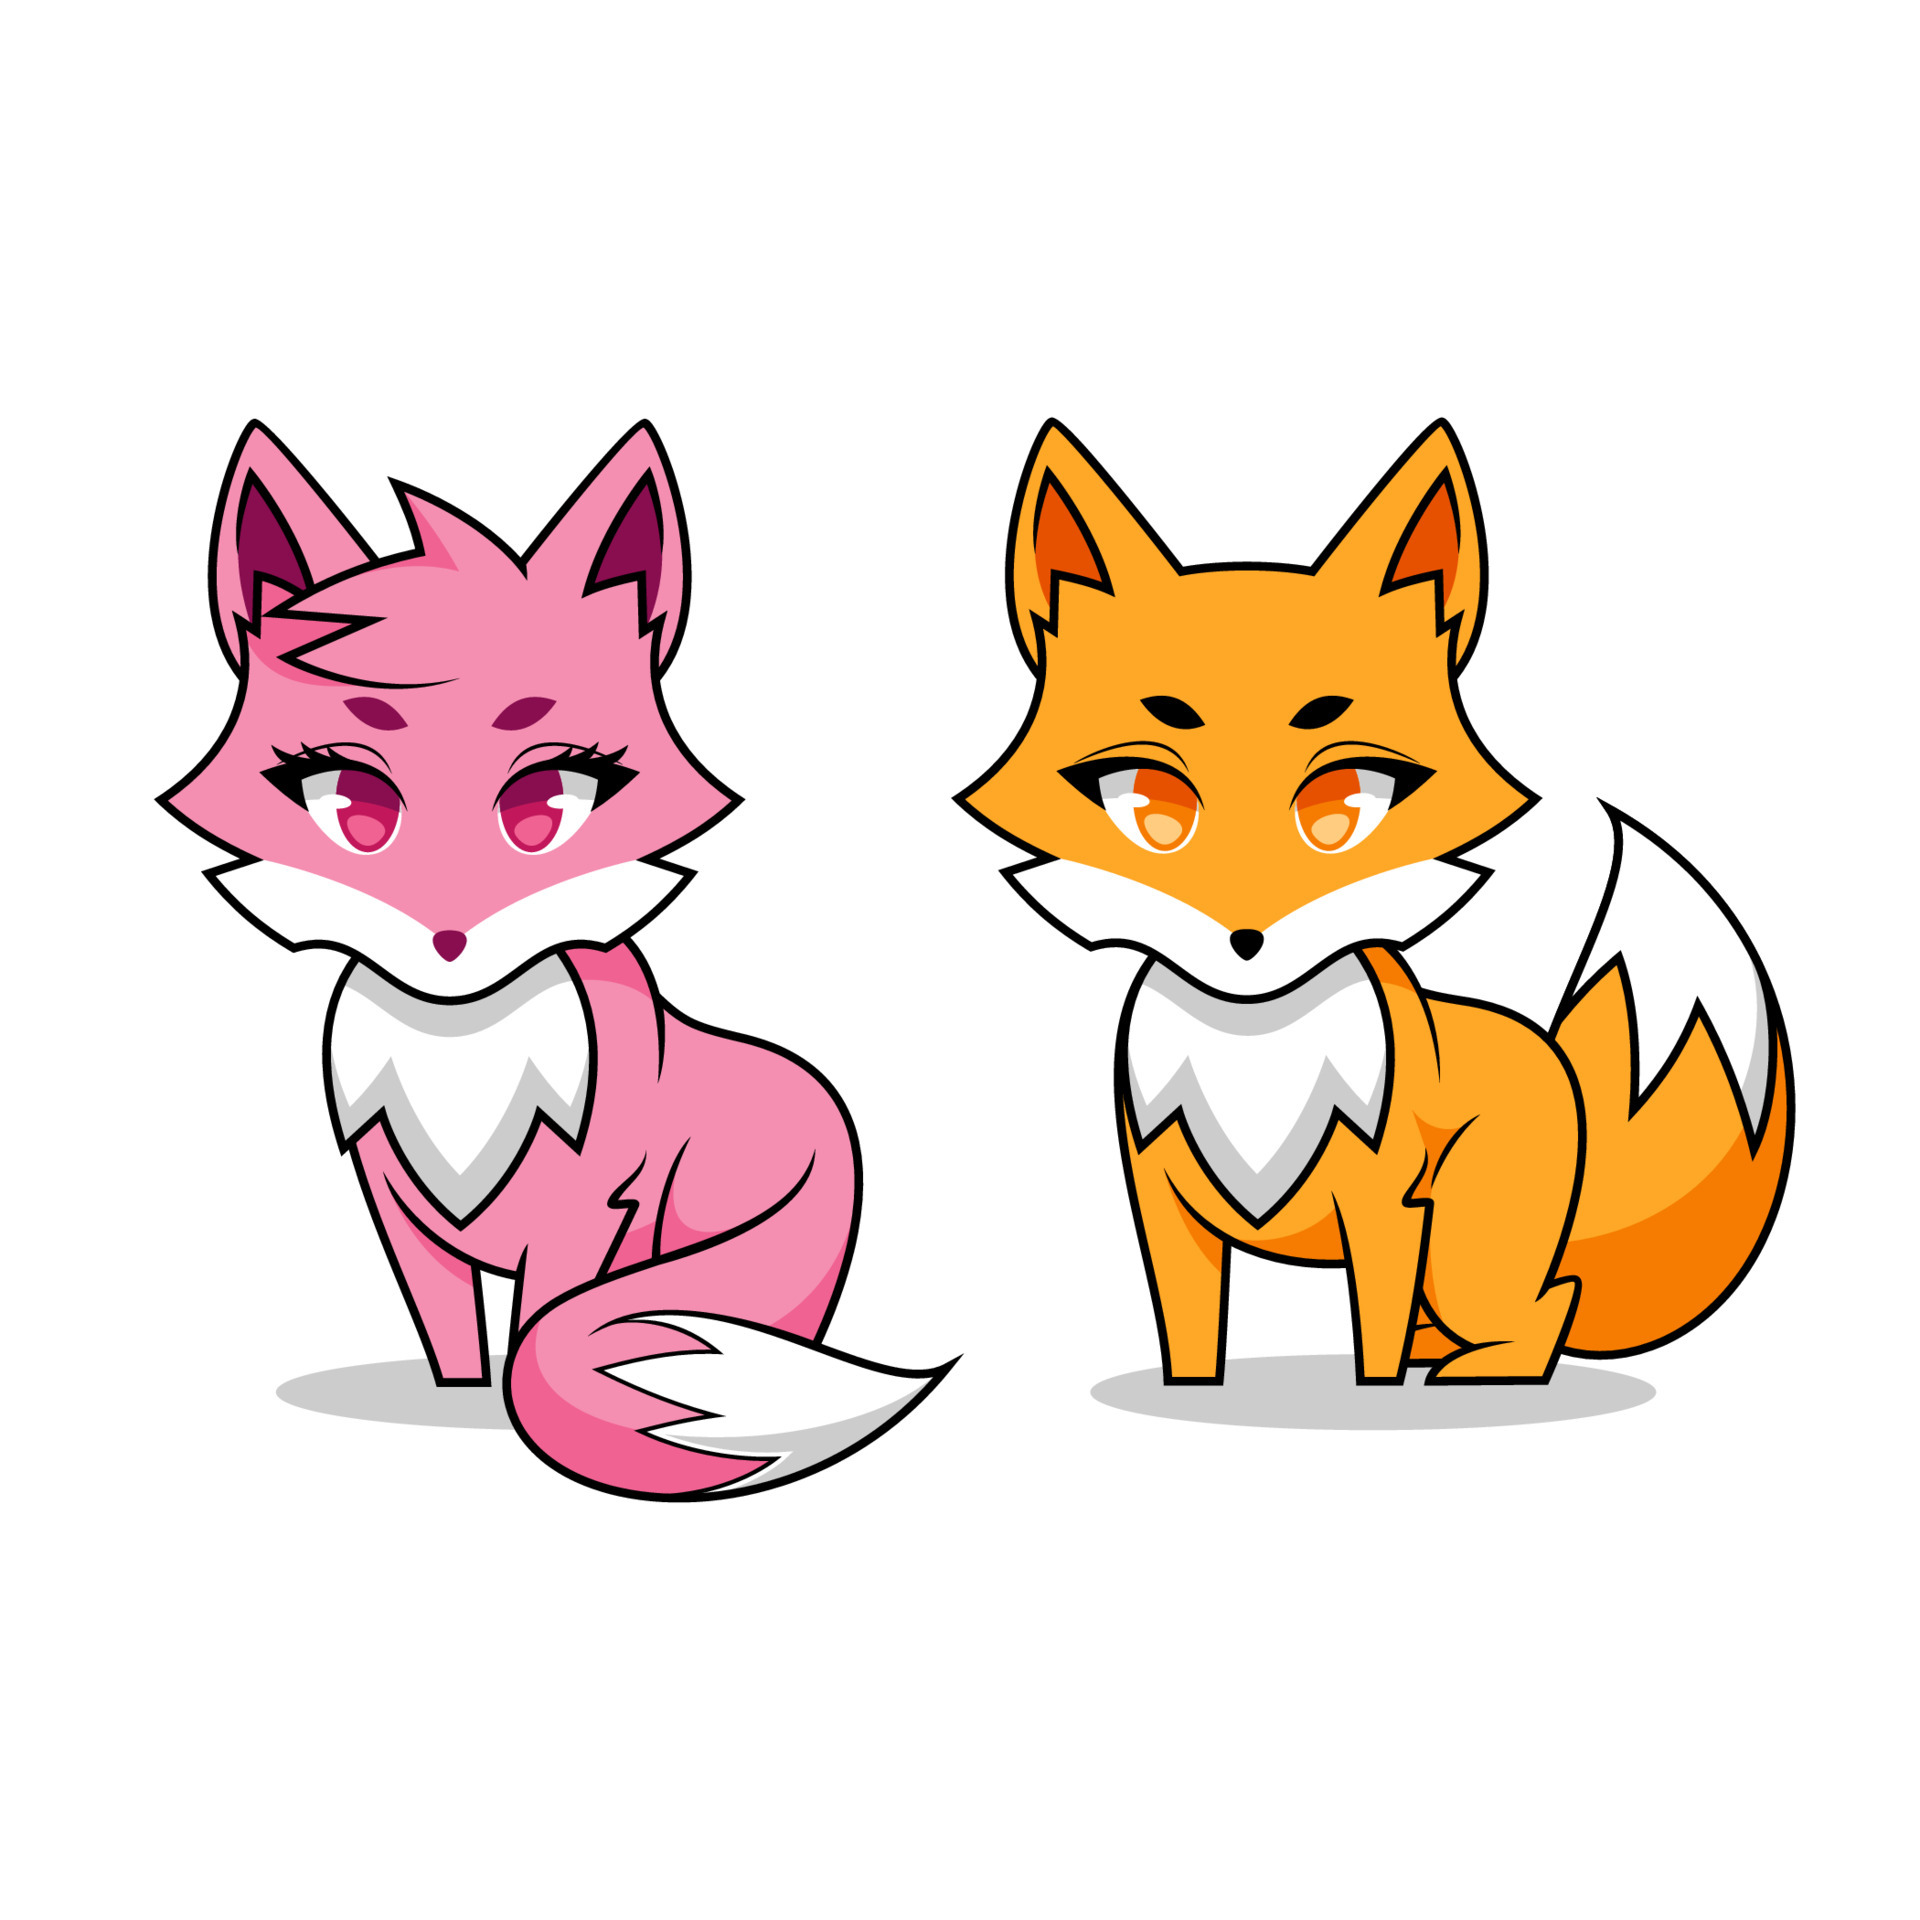 Welcome home  Cute fox girl Sen Sewayaki 28 Jul 2019Random Anime  Arts rARTs Collection of anime pictures